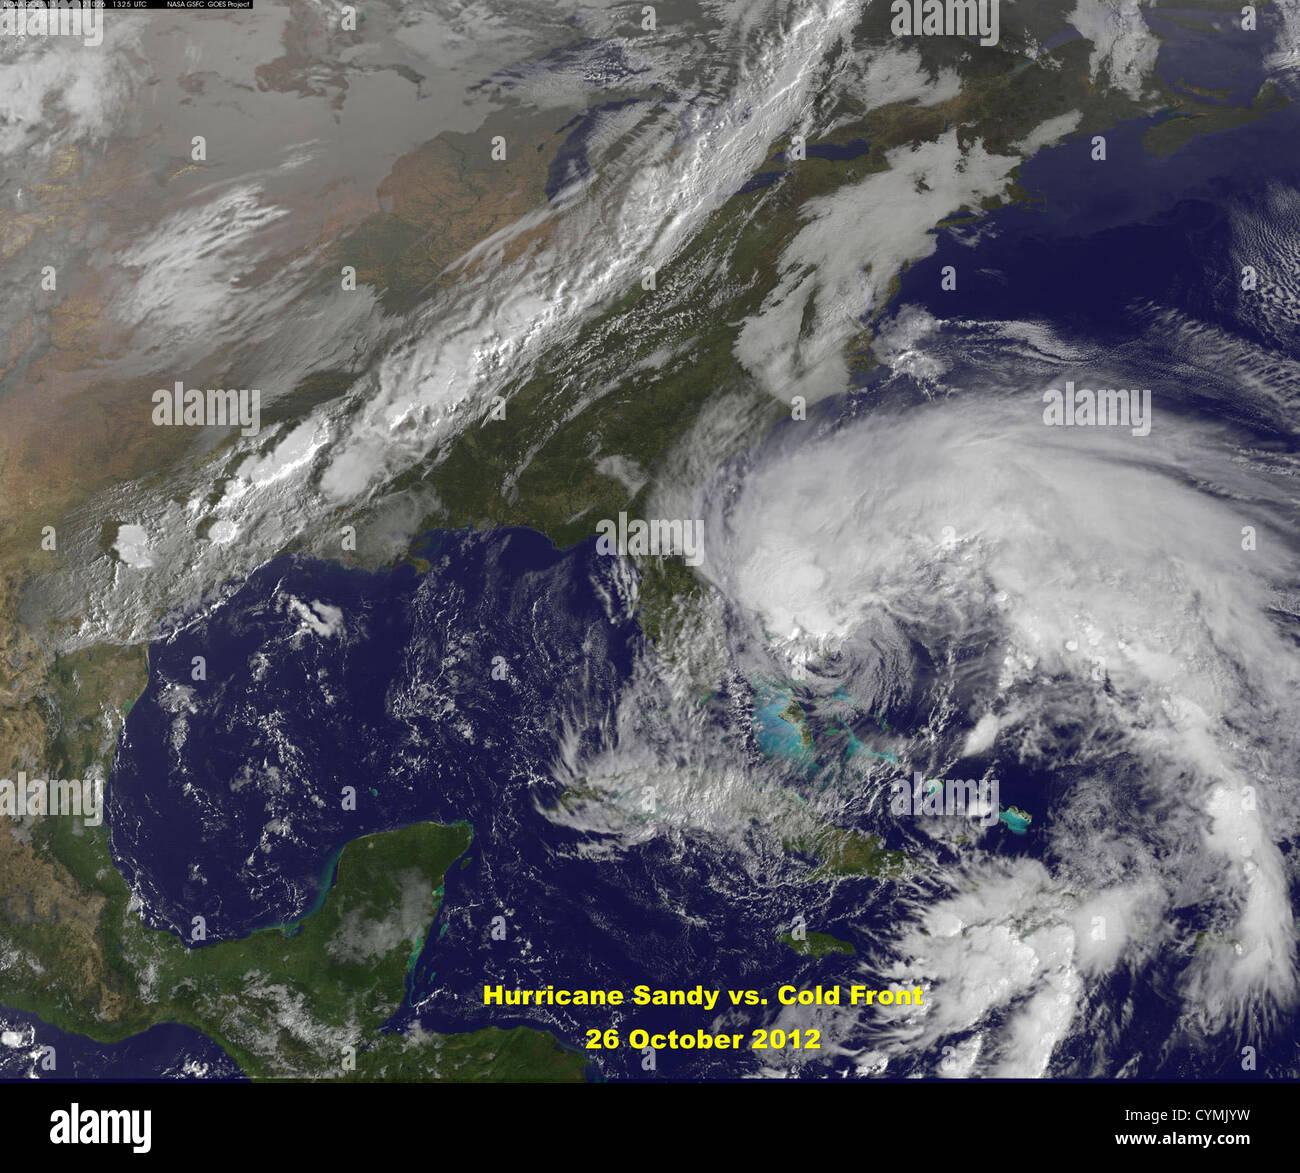 Hurrikan Sandy Vs Kaltfront. 26. Oktober 2012. Satellitenbild. Stockfoto